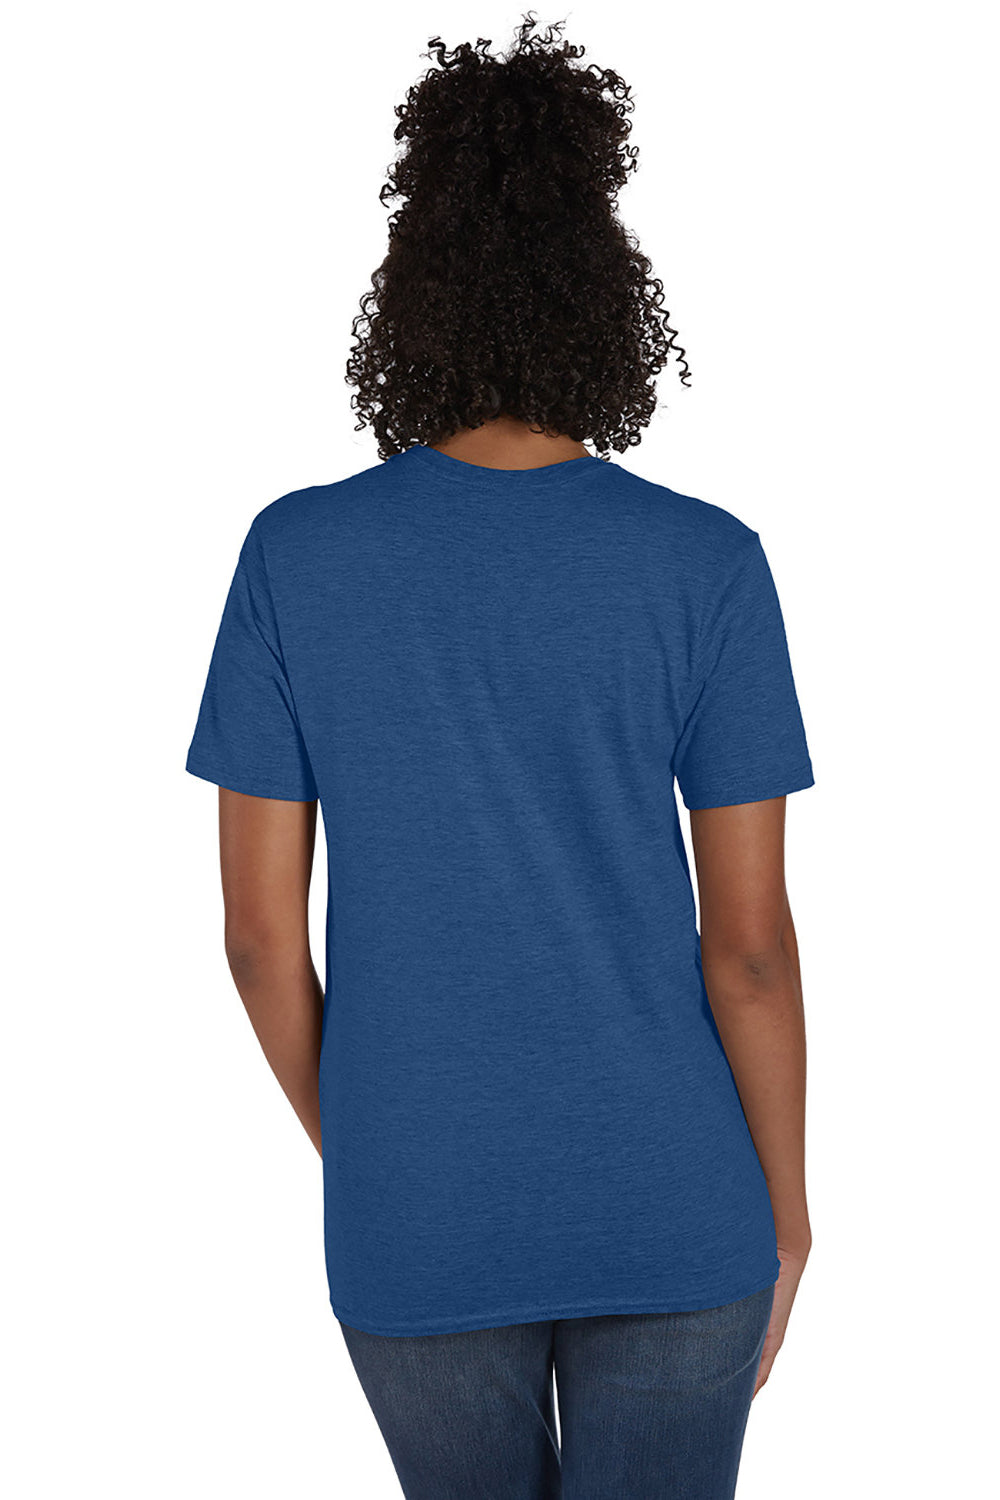 Hanes 4980 Mens Nano-T Short Sleeve Crewneck T-Shirt Heather Regal Navy Blue Back